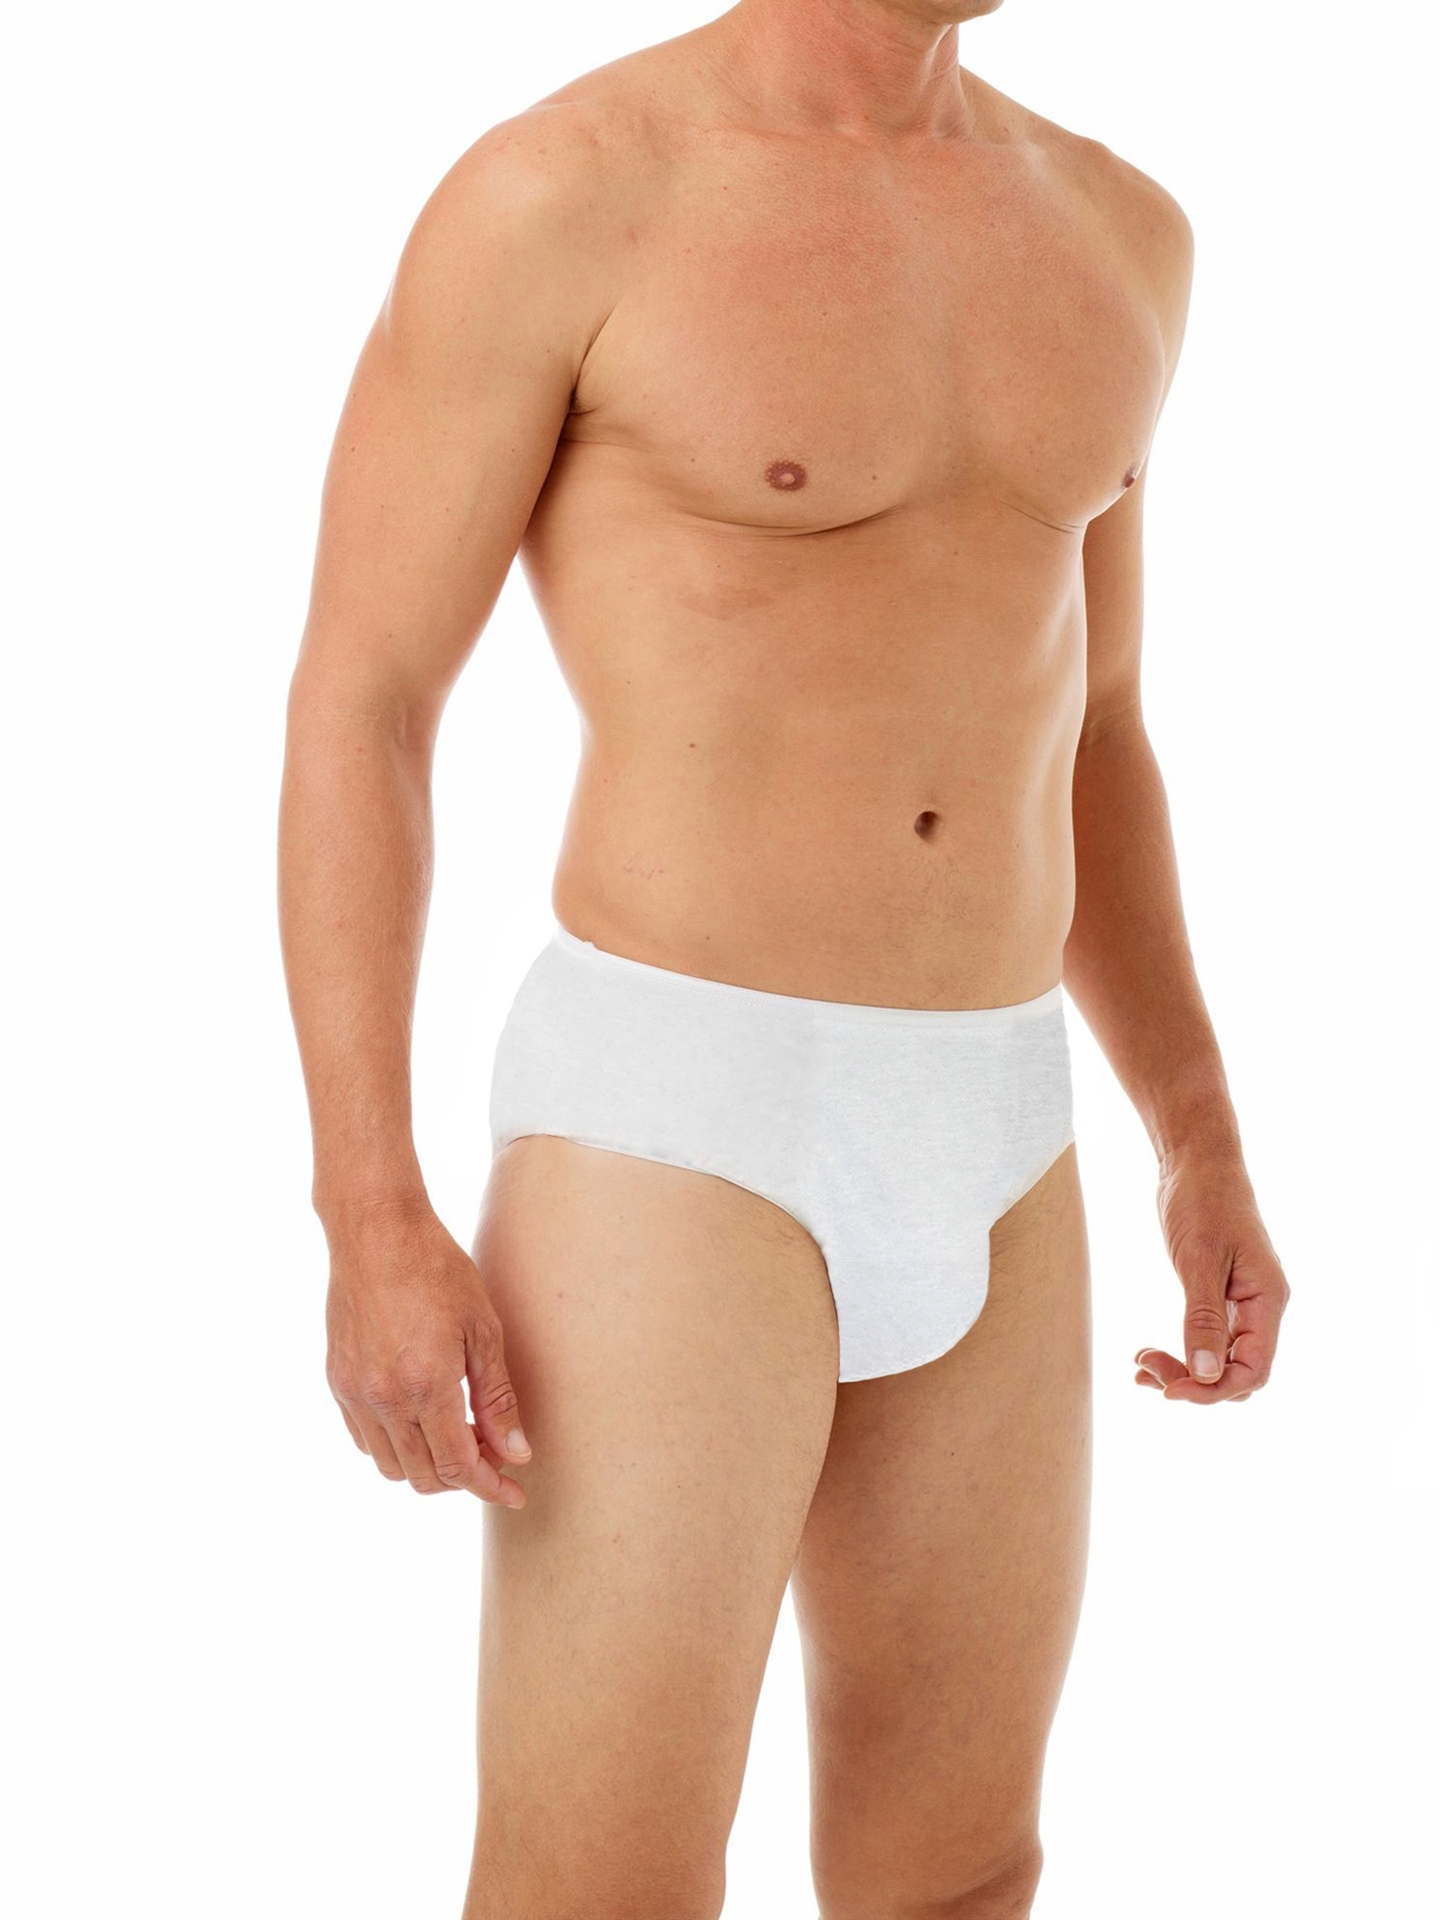 Men's Cotton Disposable Underwear, Great for Travel